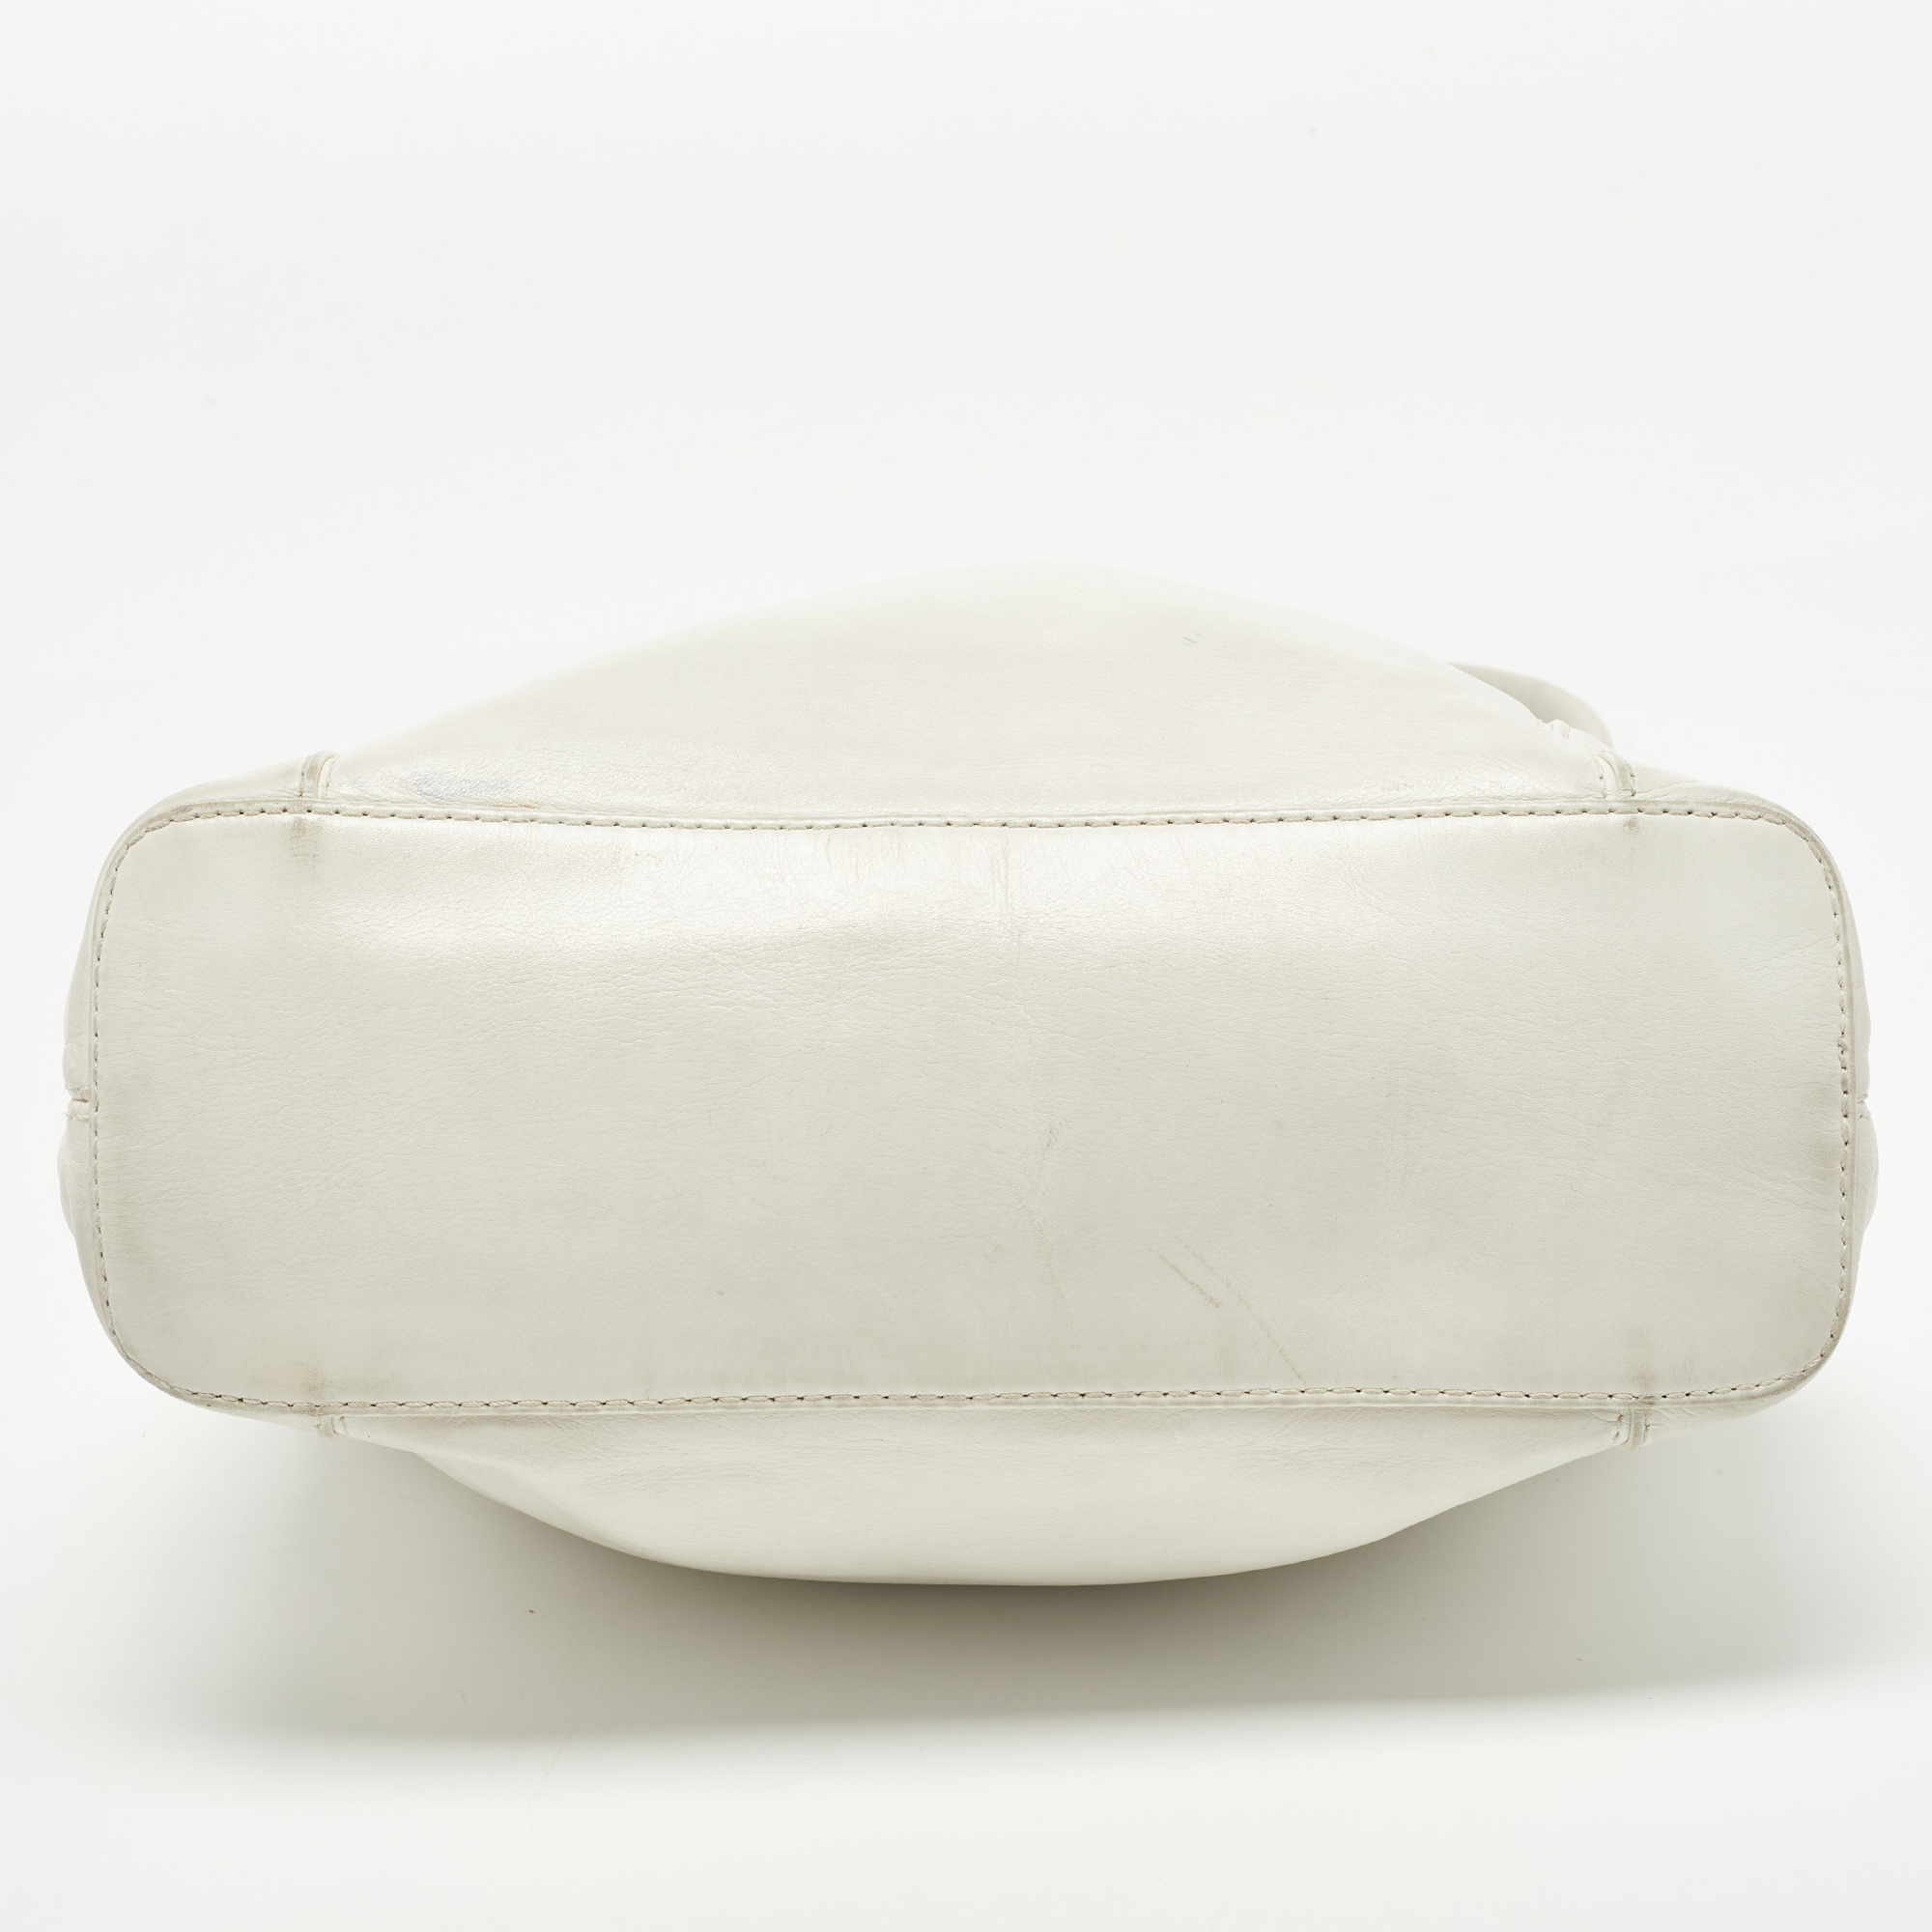 Chanel White Leather Vintage CC Tassel Bag